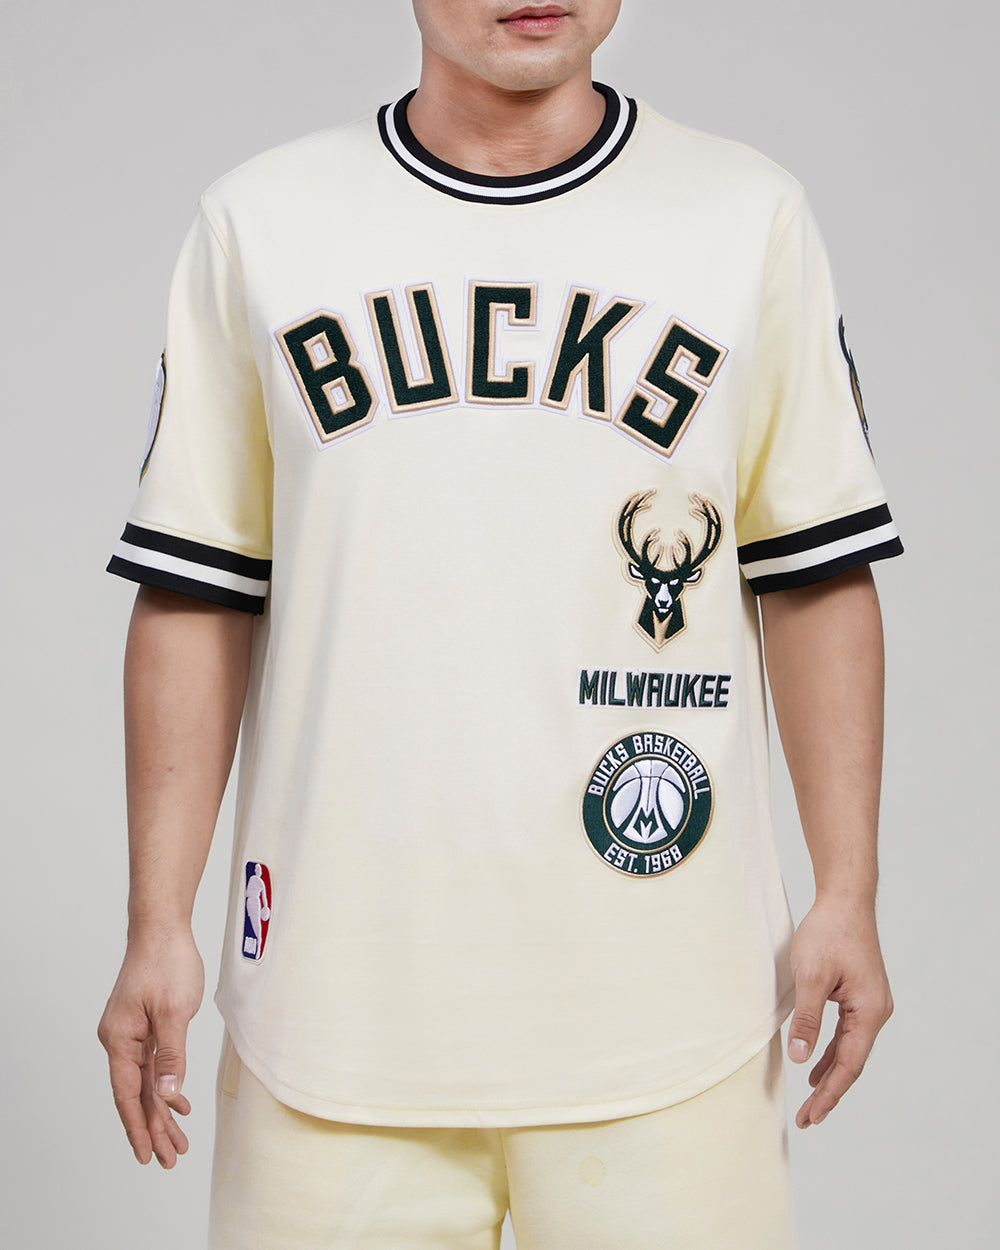 Milwaukee Bucks Throwback Jerseys, Vintage NBA Gear